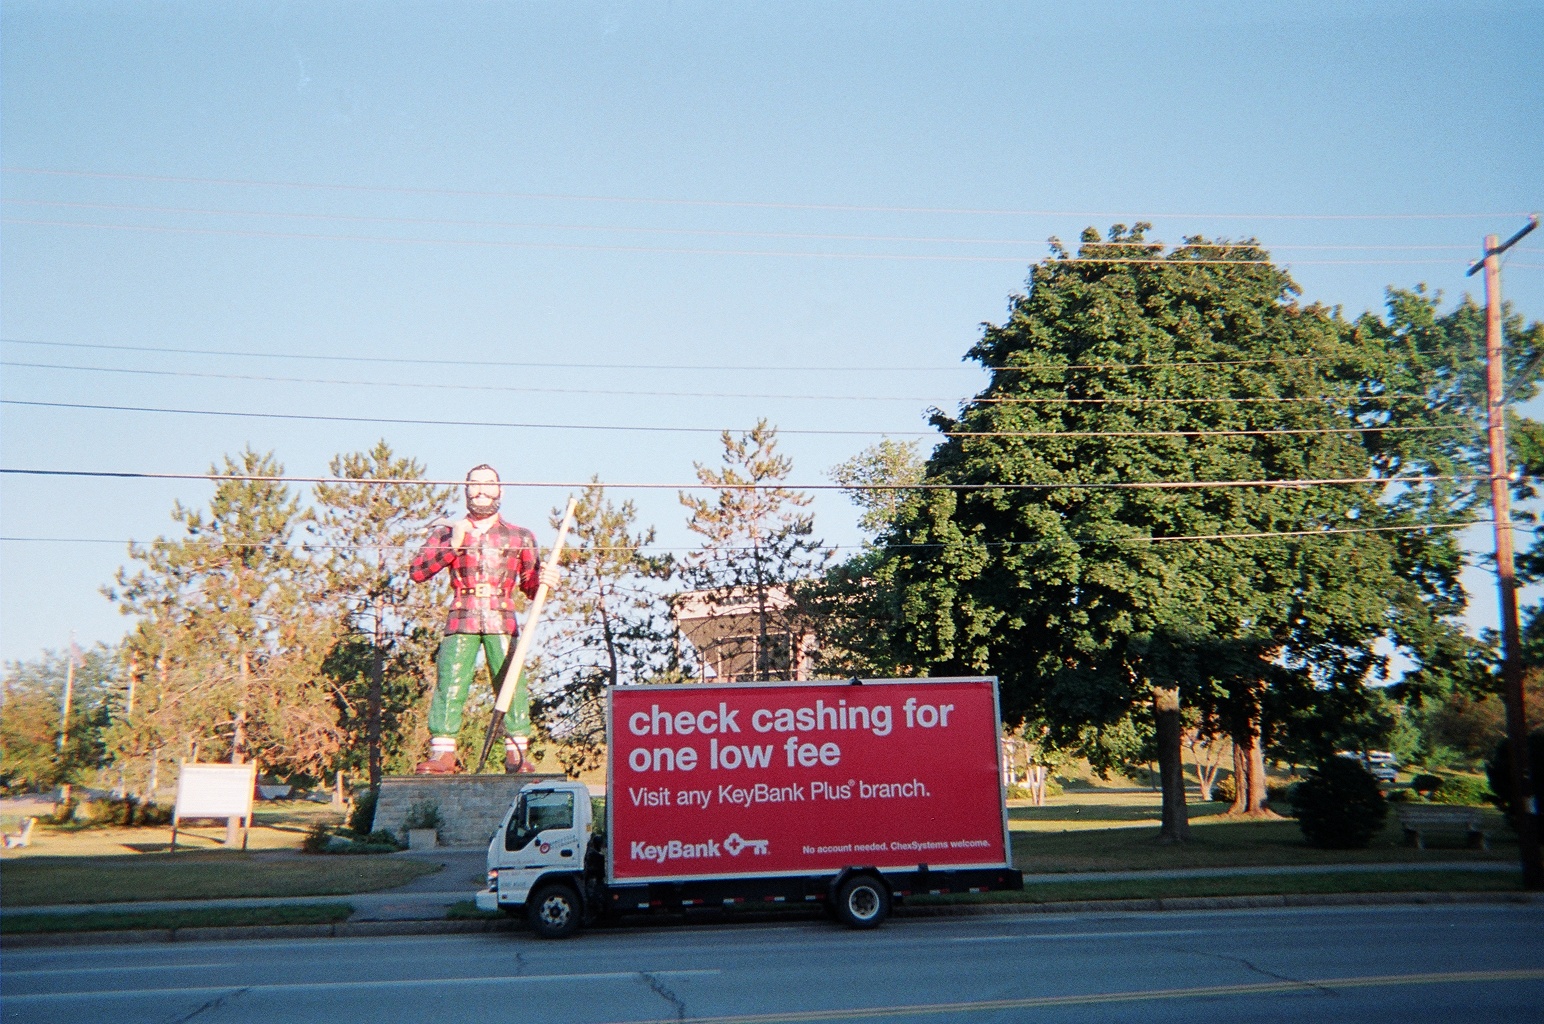 Billboard truck stopped in front of lumberjack statue in Bangor ME